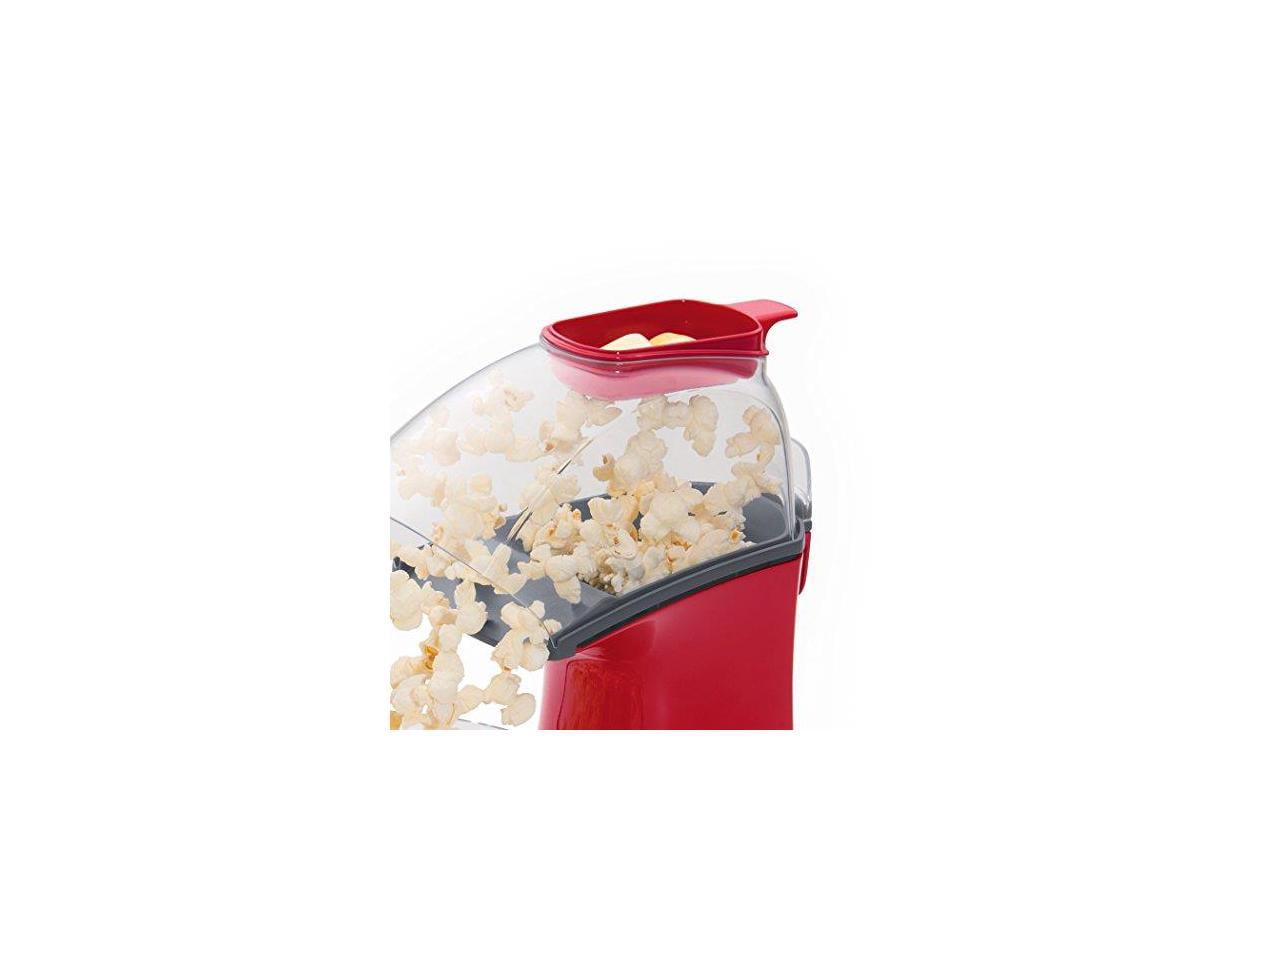 Presto PopLite Hot Air Popcorn Popper - Shop Cookers & Roasters at